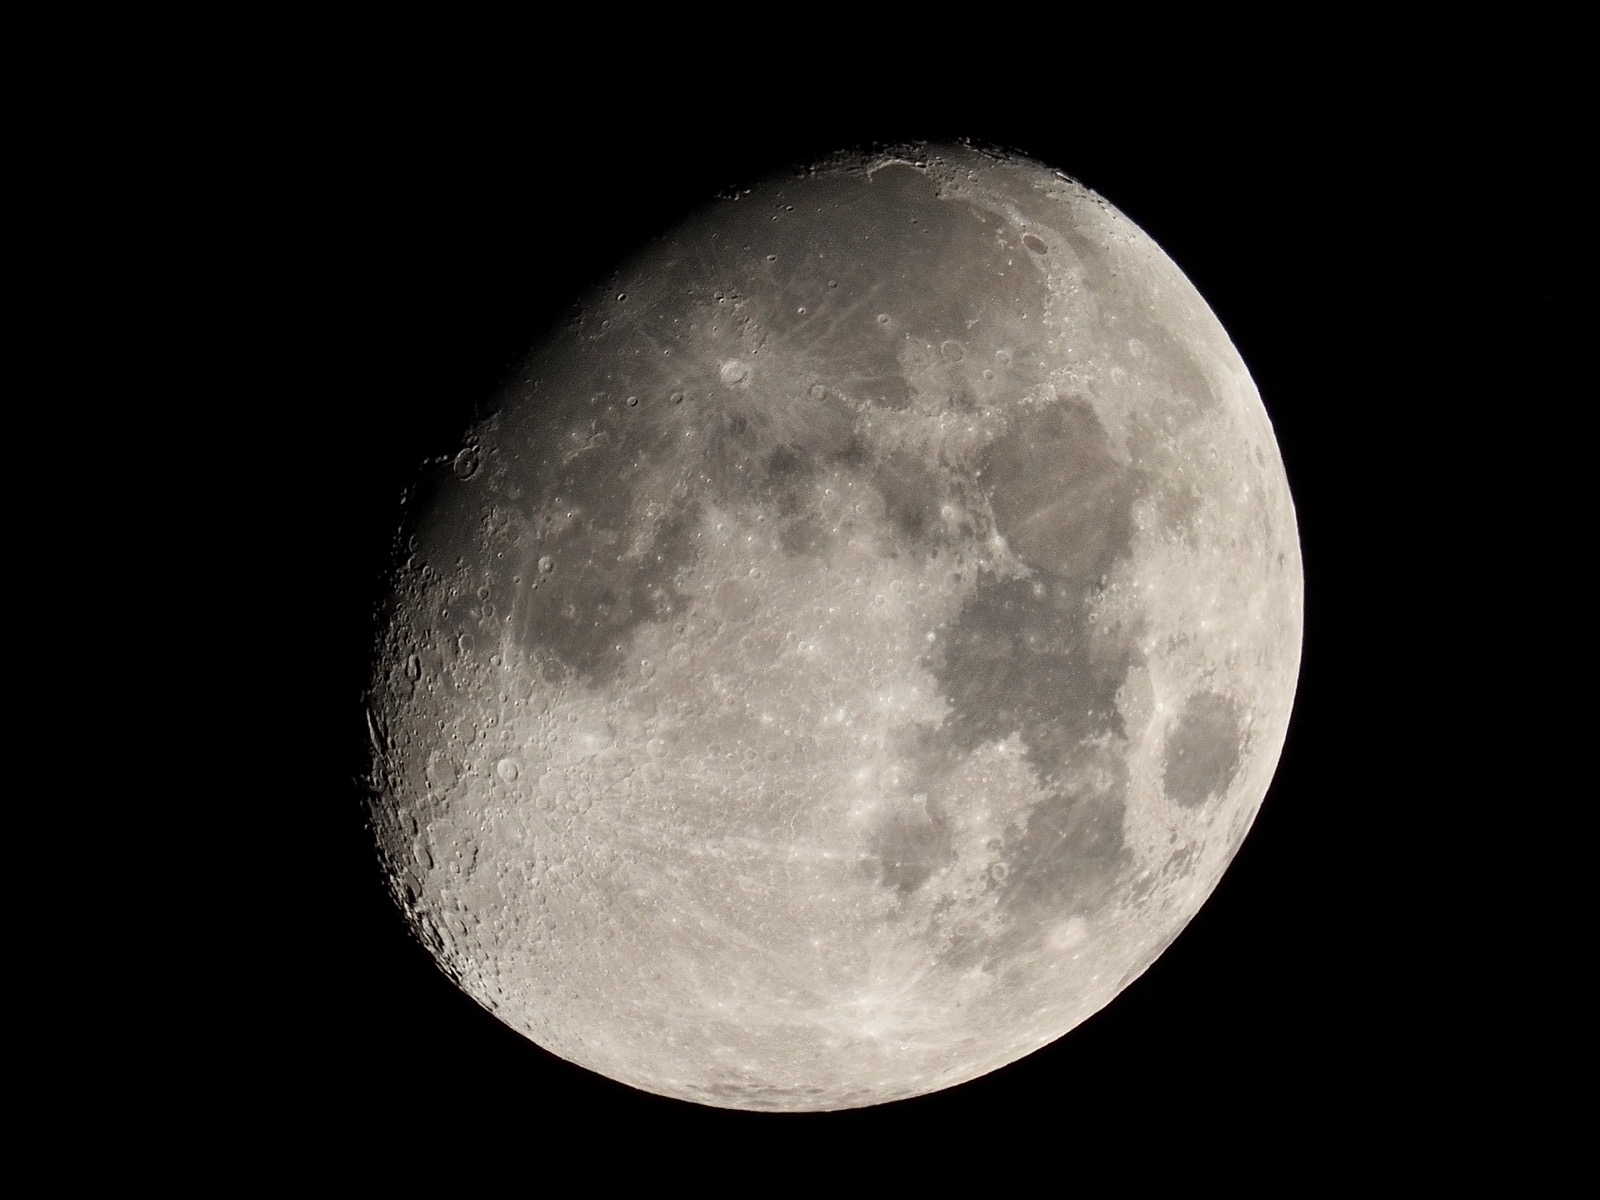 Closeup of waxing gibbous moon 87% illuminated